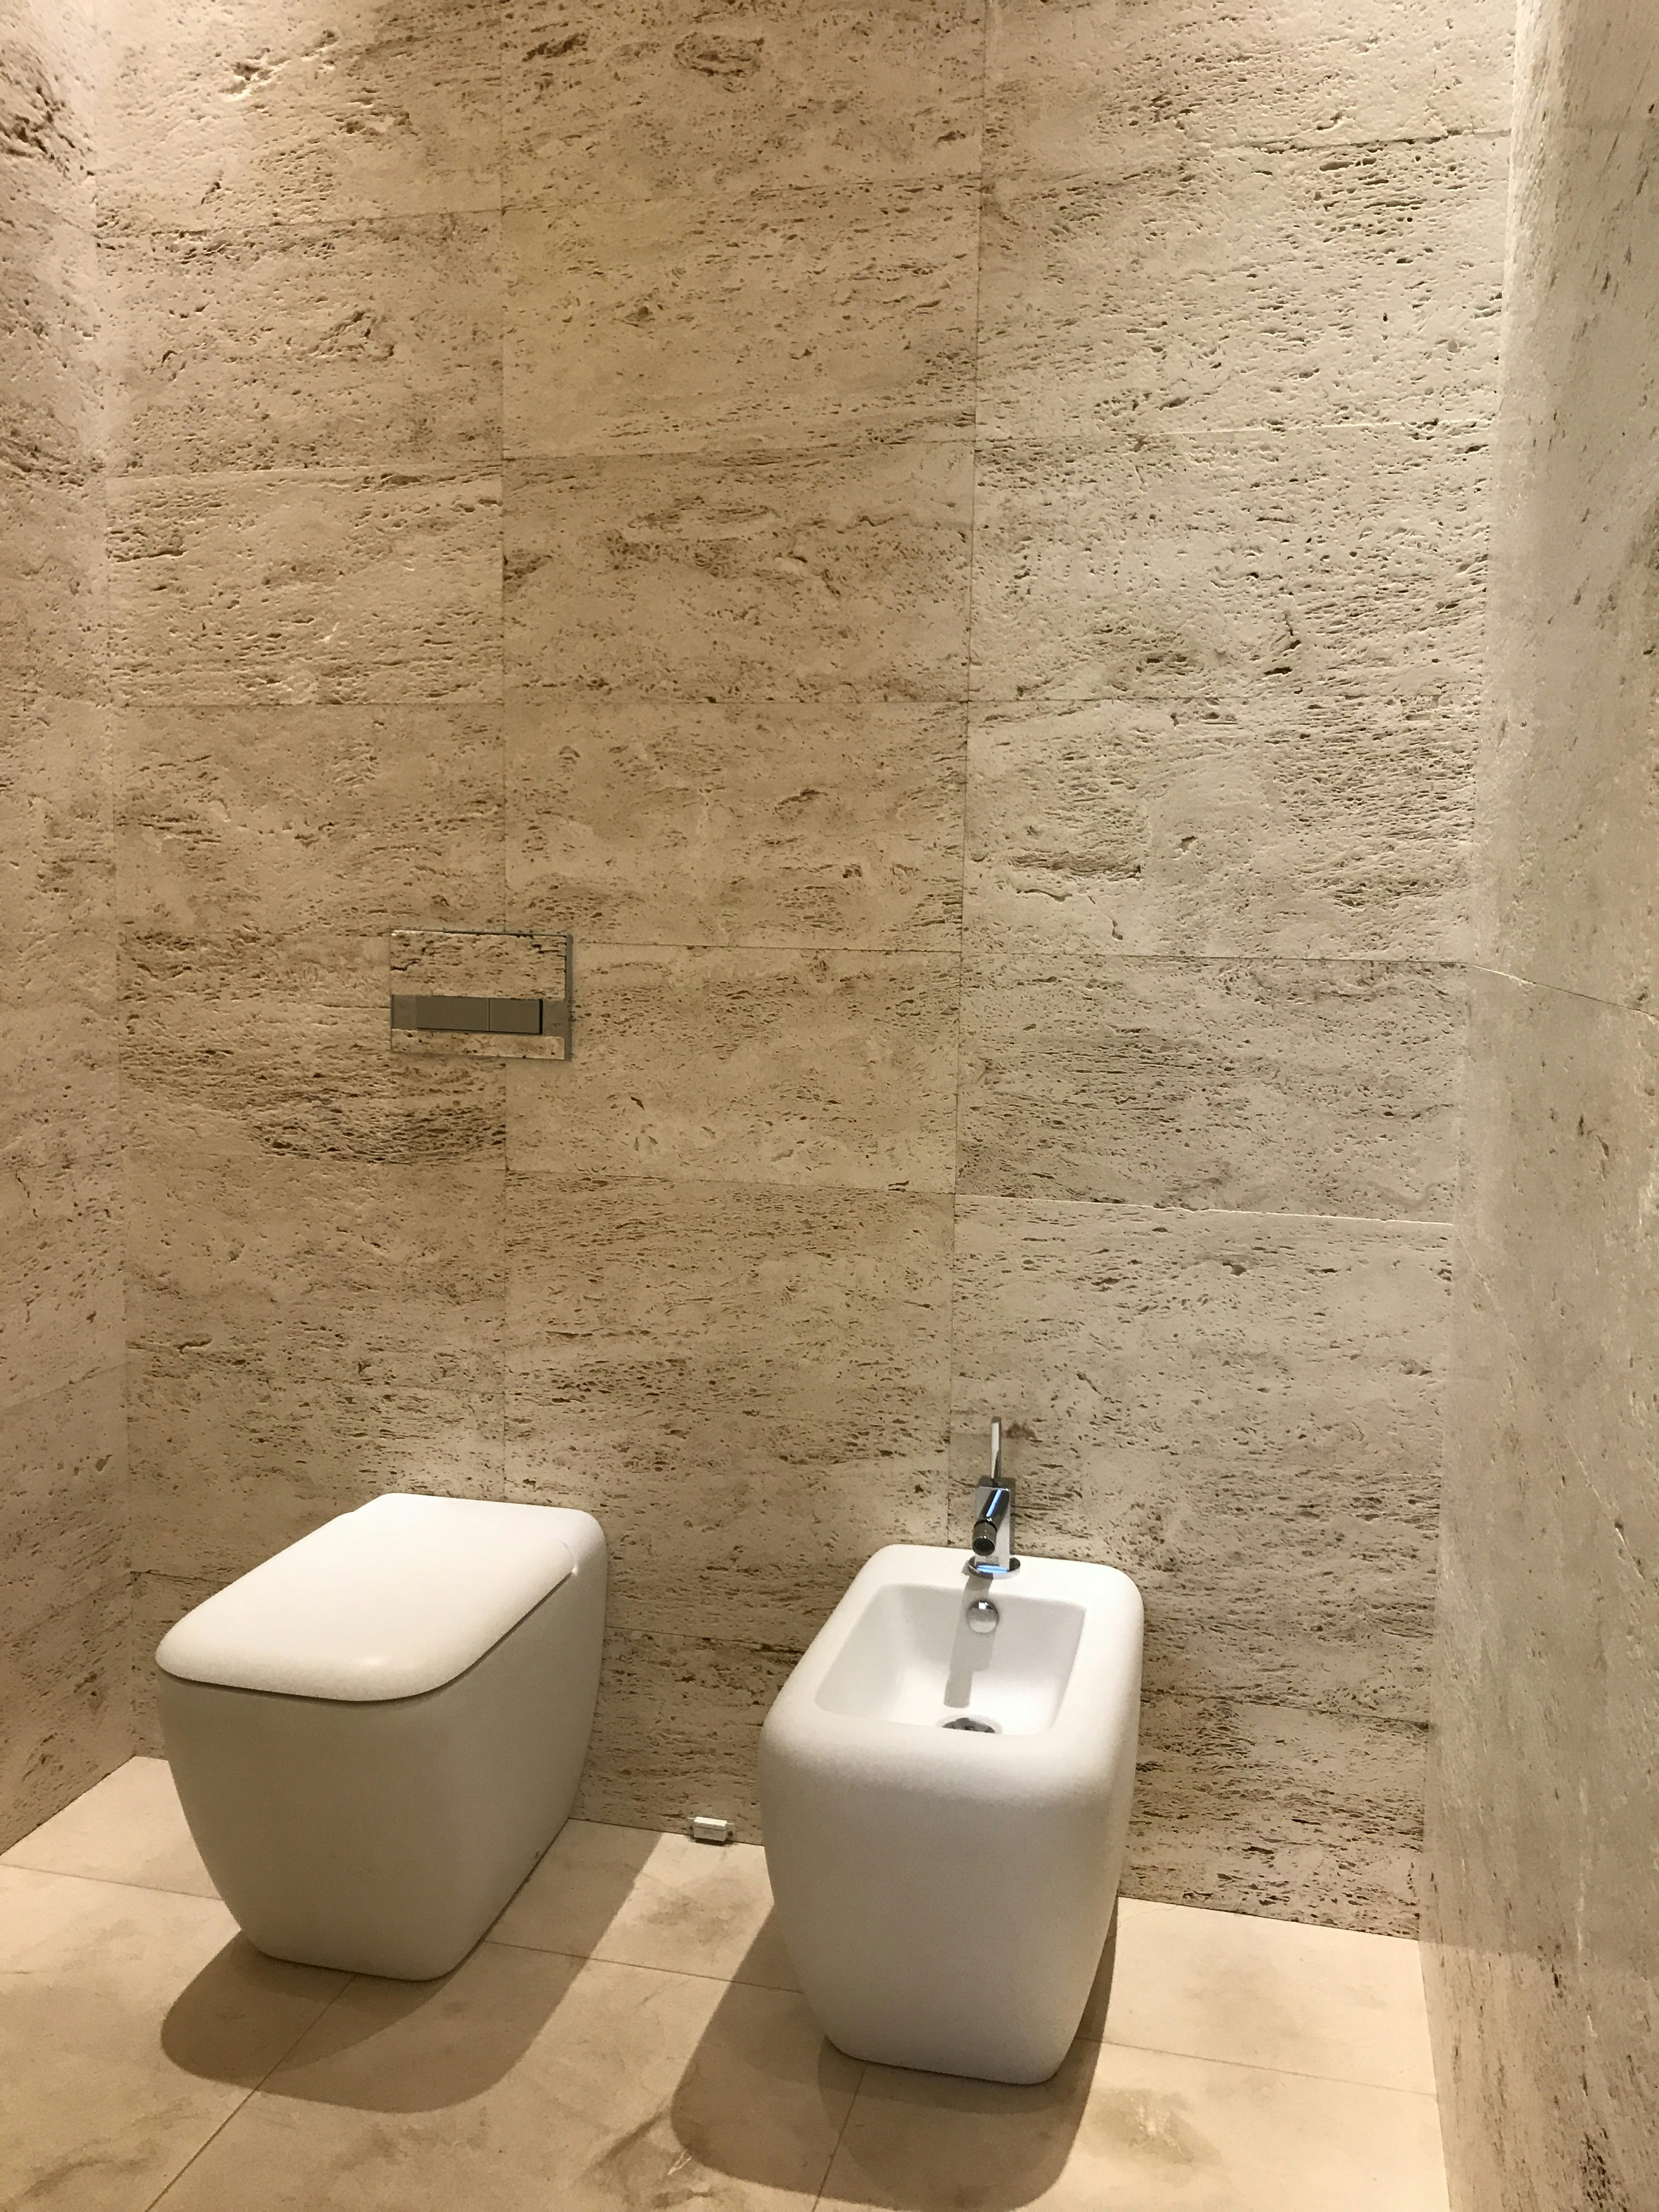 Bidet vs Washlet comparison in modern bathroom